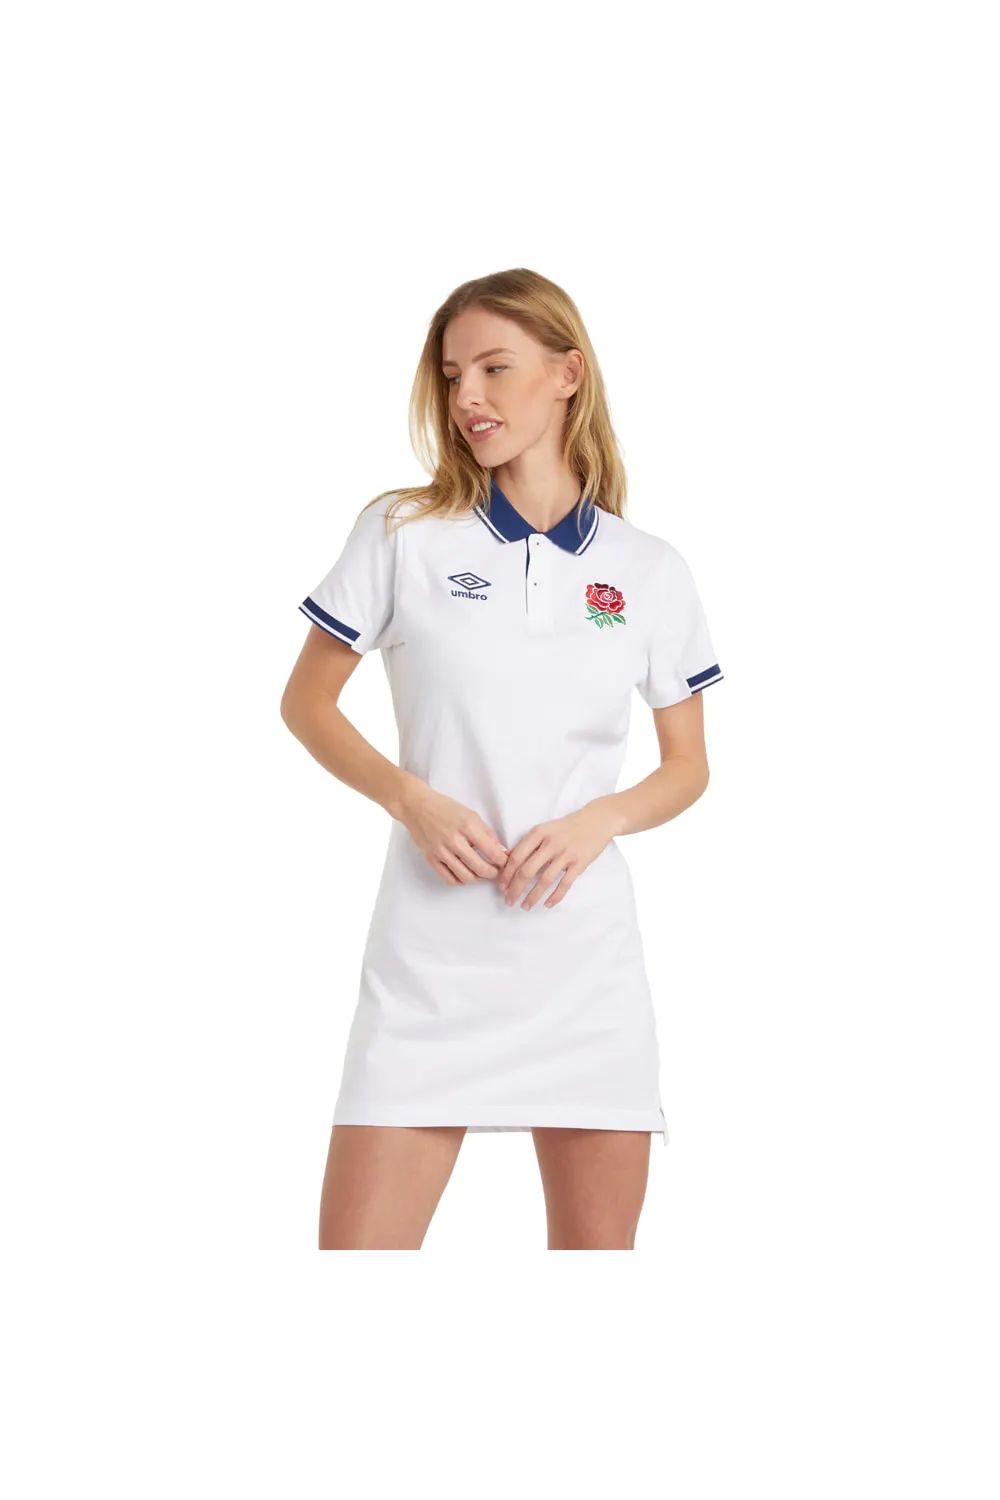 Umbro England Rugby Womens Classic Polo Shirt Dress - White/Navy | Verishop